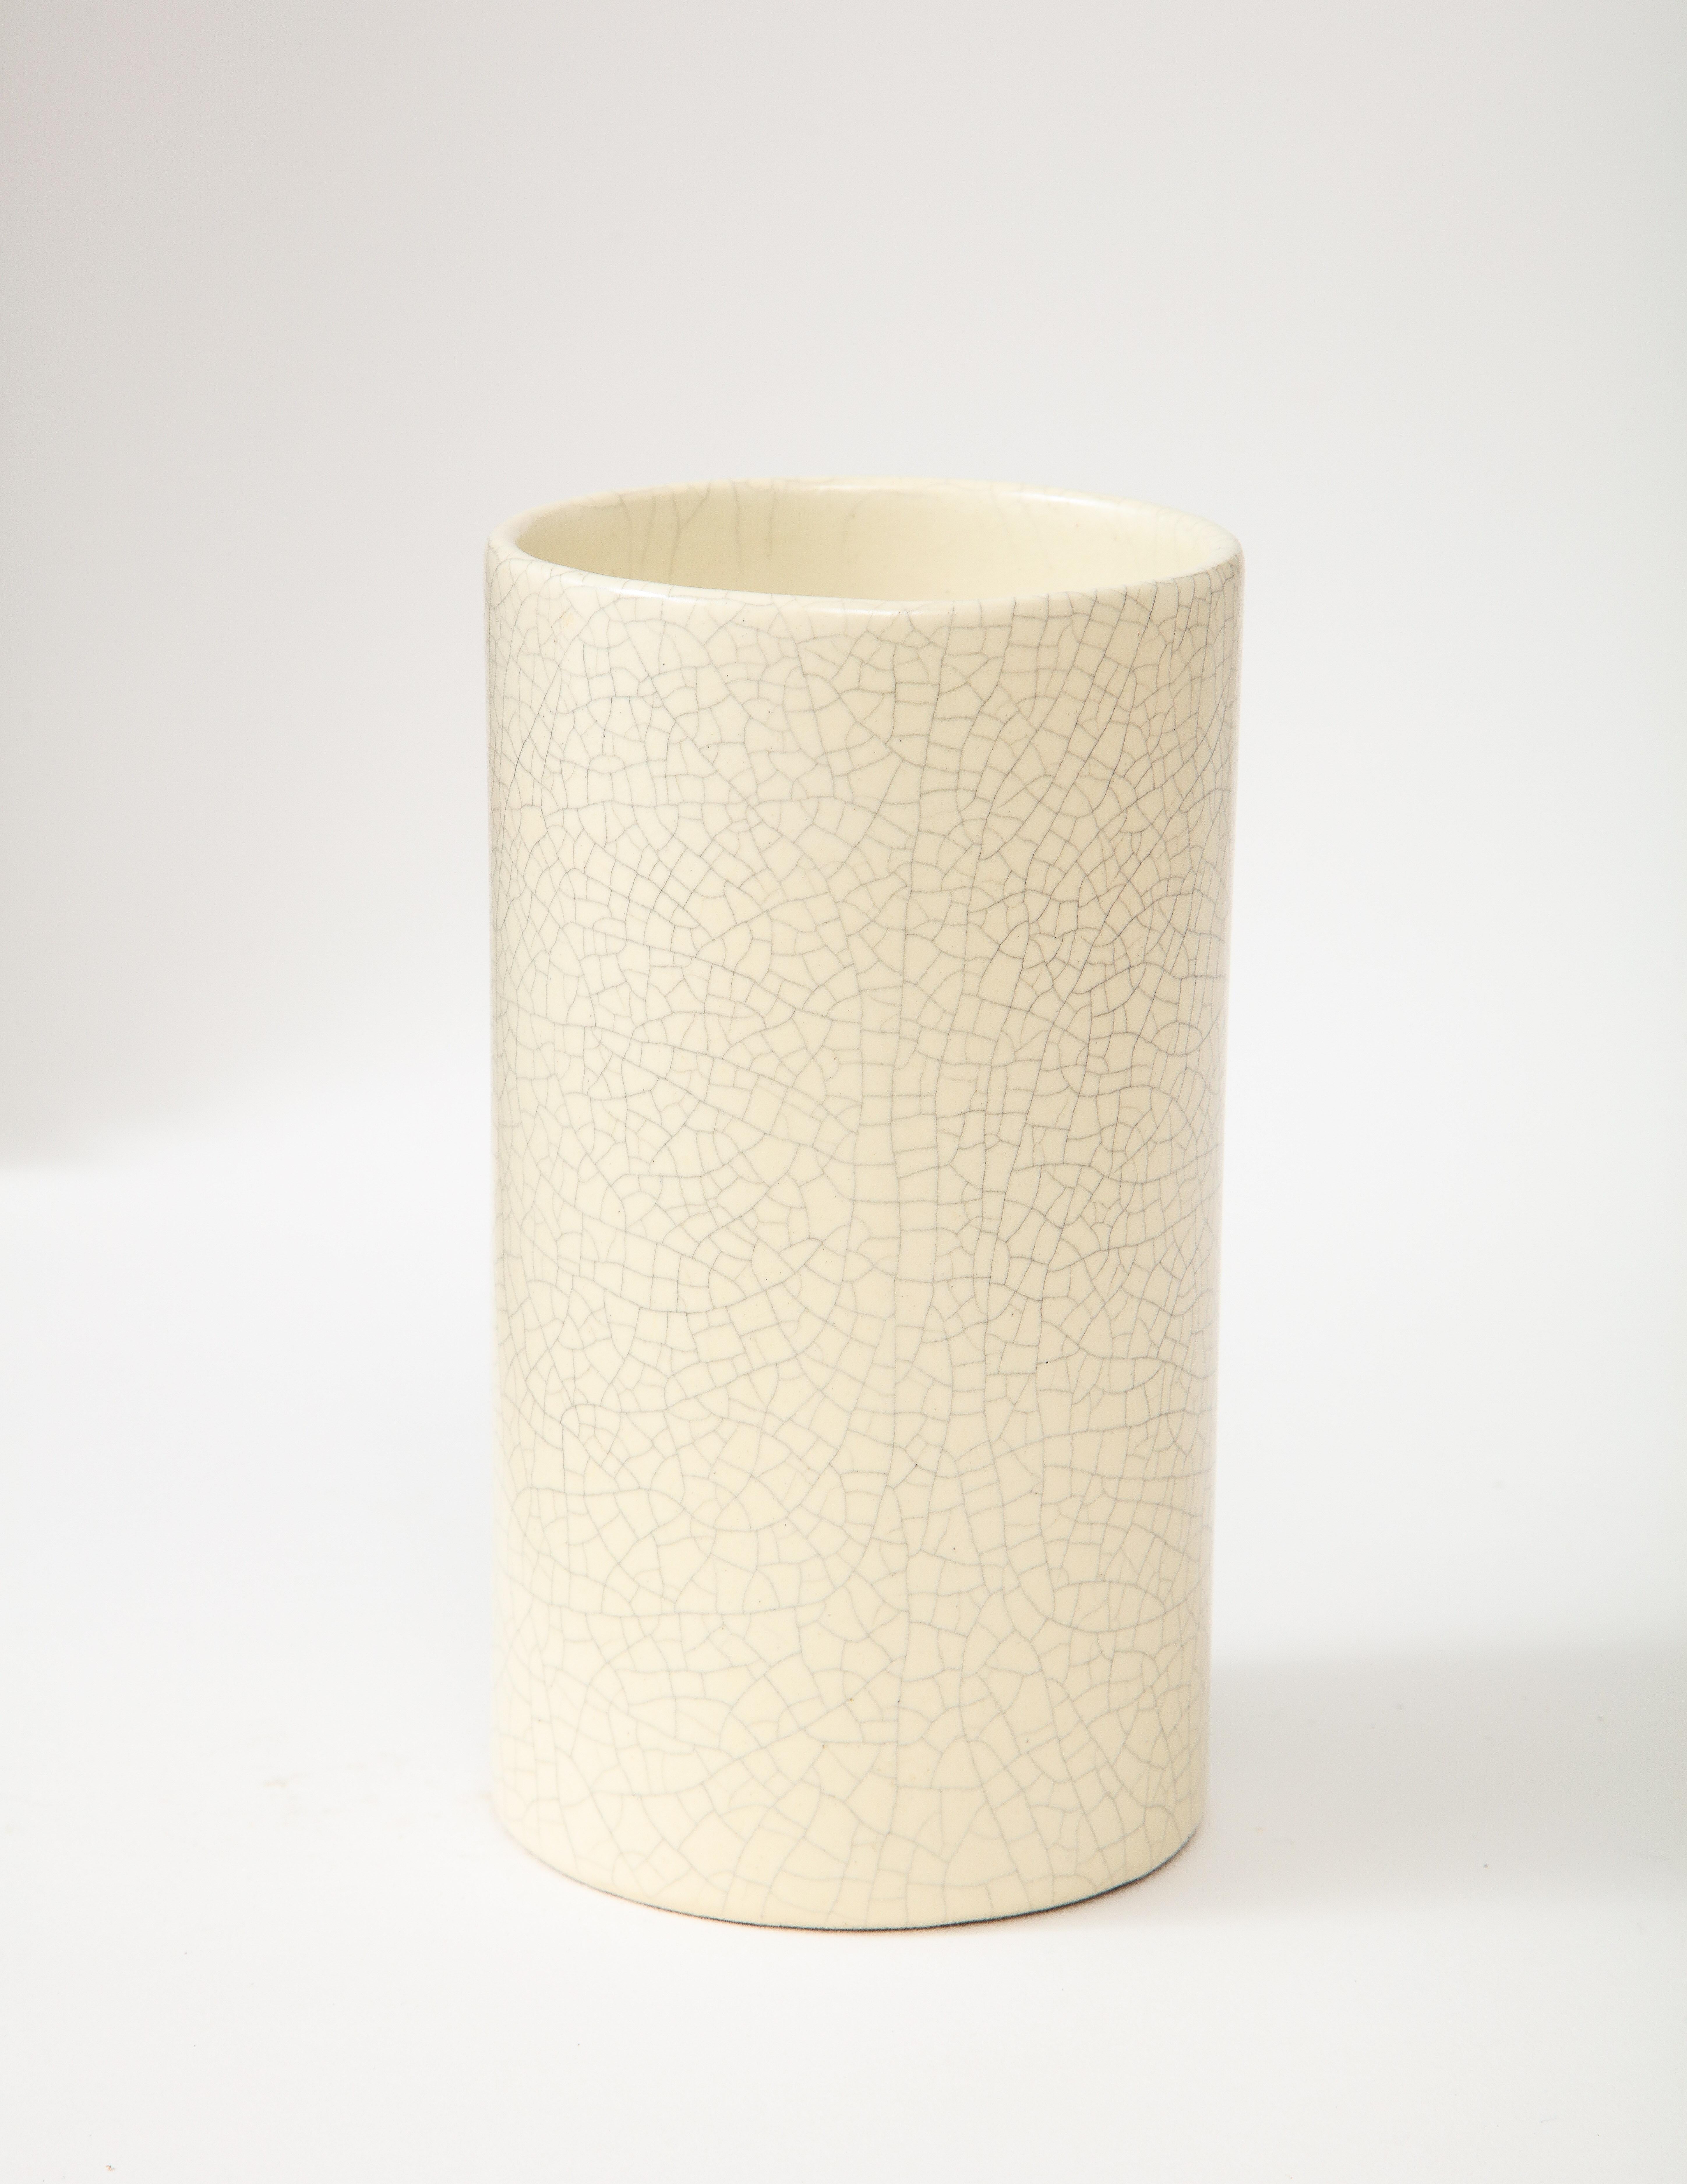 Off white crackle vase, France, c. 1960
Measures: Height: 7.5 Diameter. 4 in.